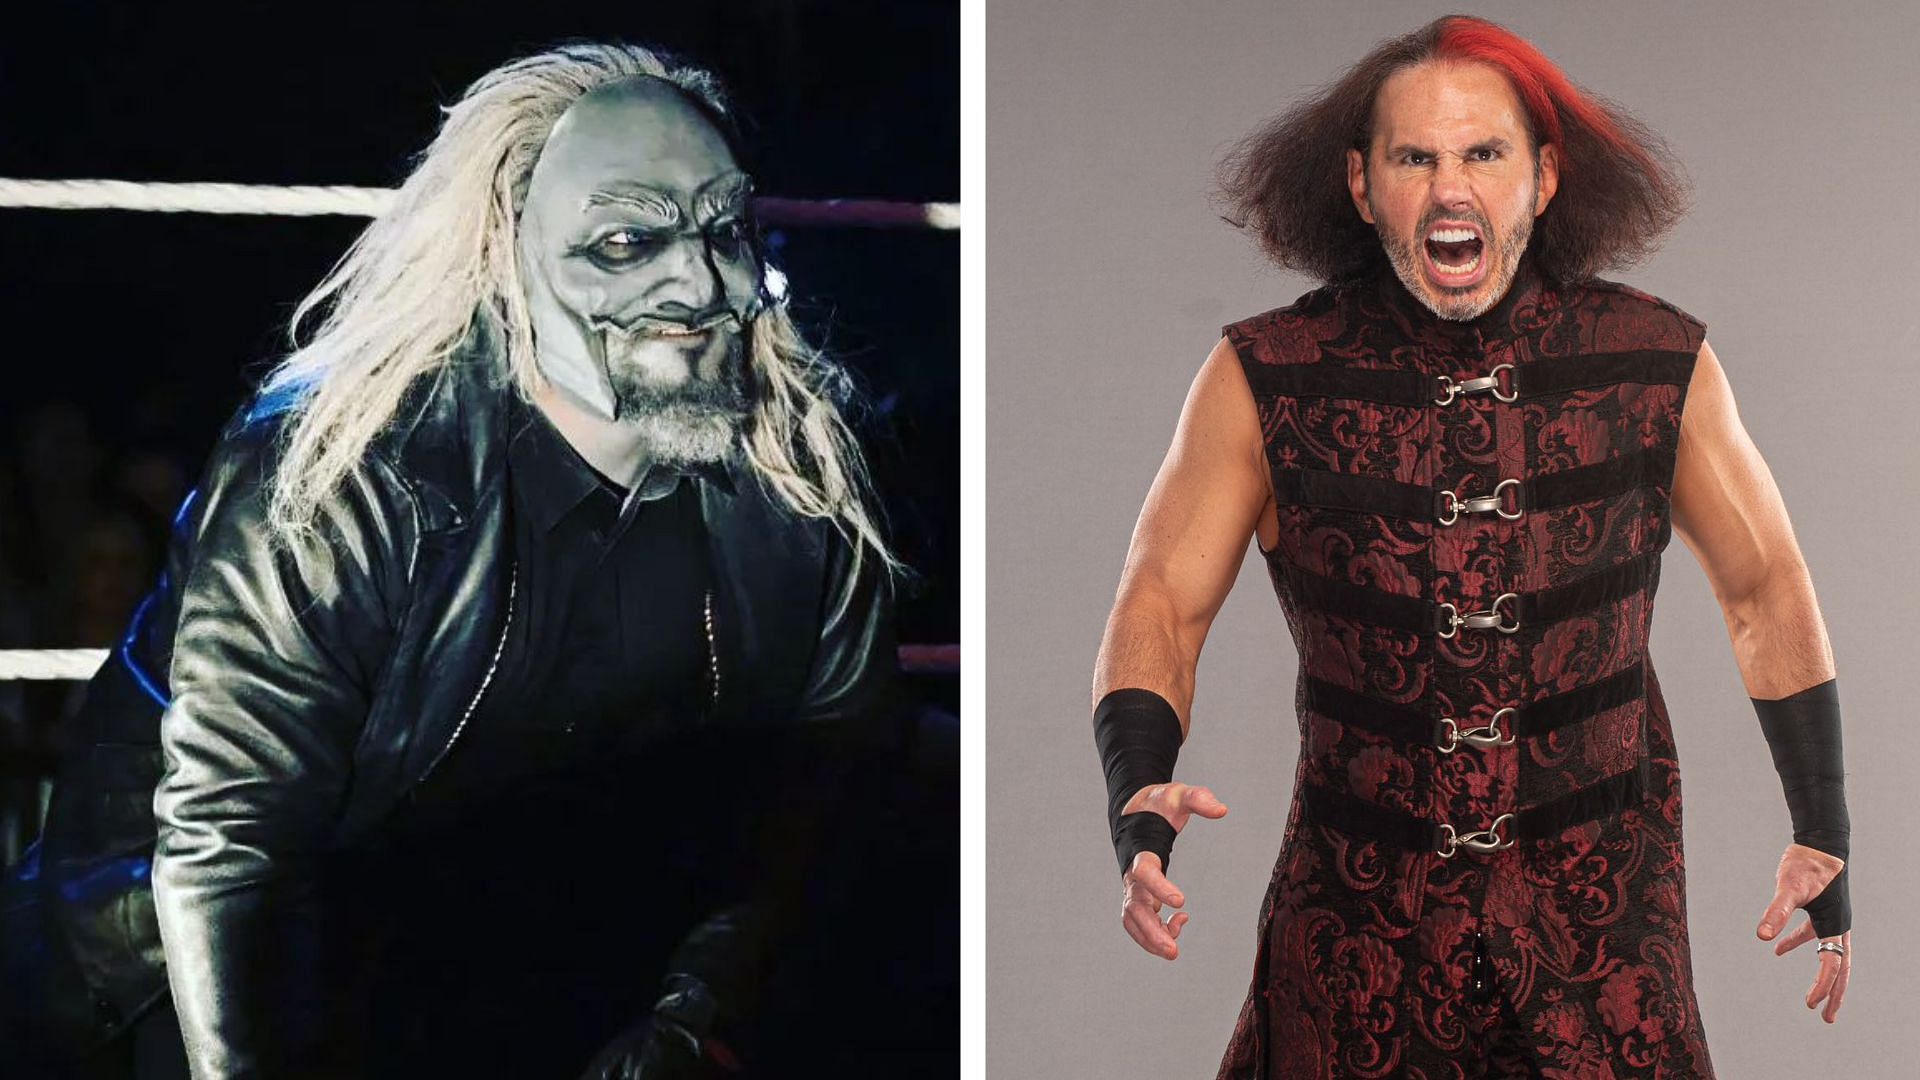 Matt Hardy could potentially return to WWE alongside Uncle Howdy